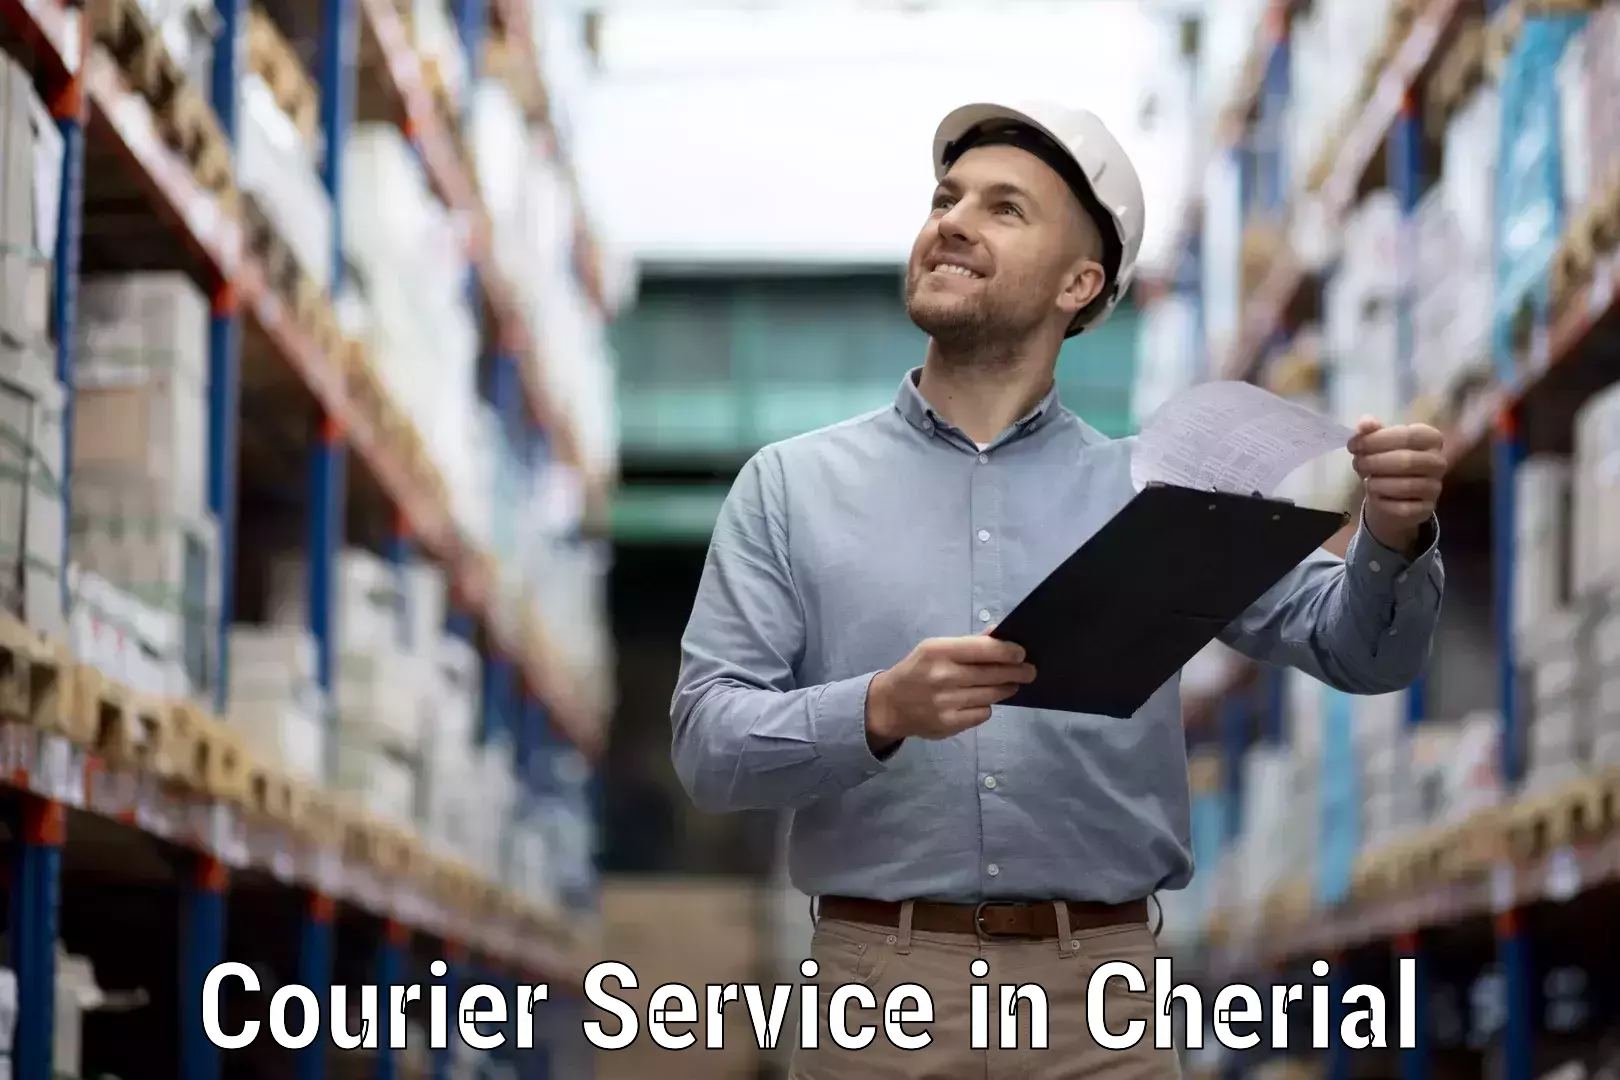 Efficient parcel service in Cherial